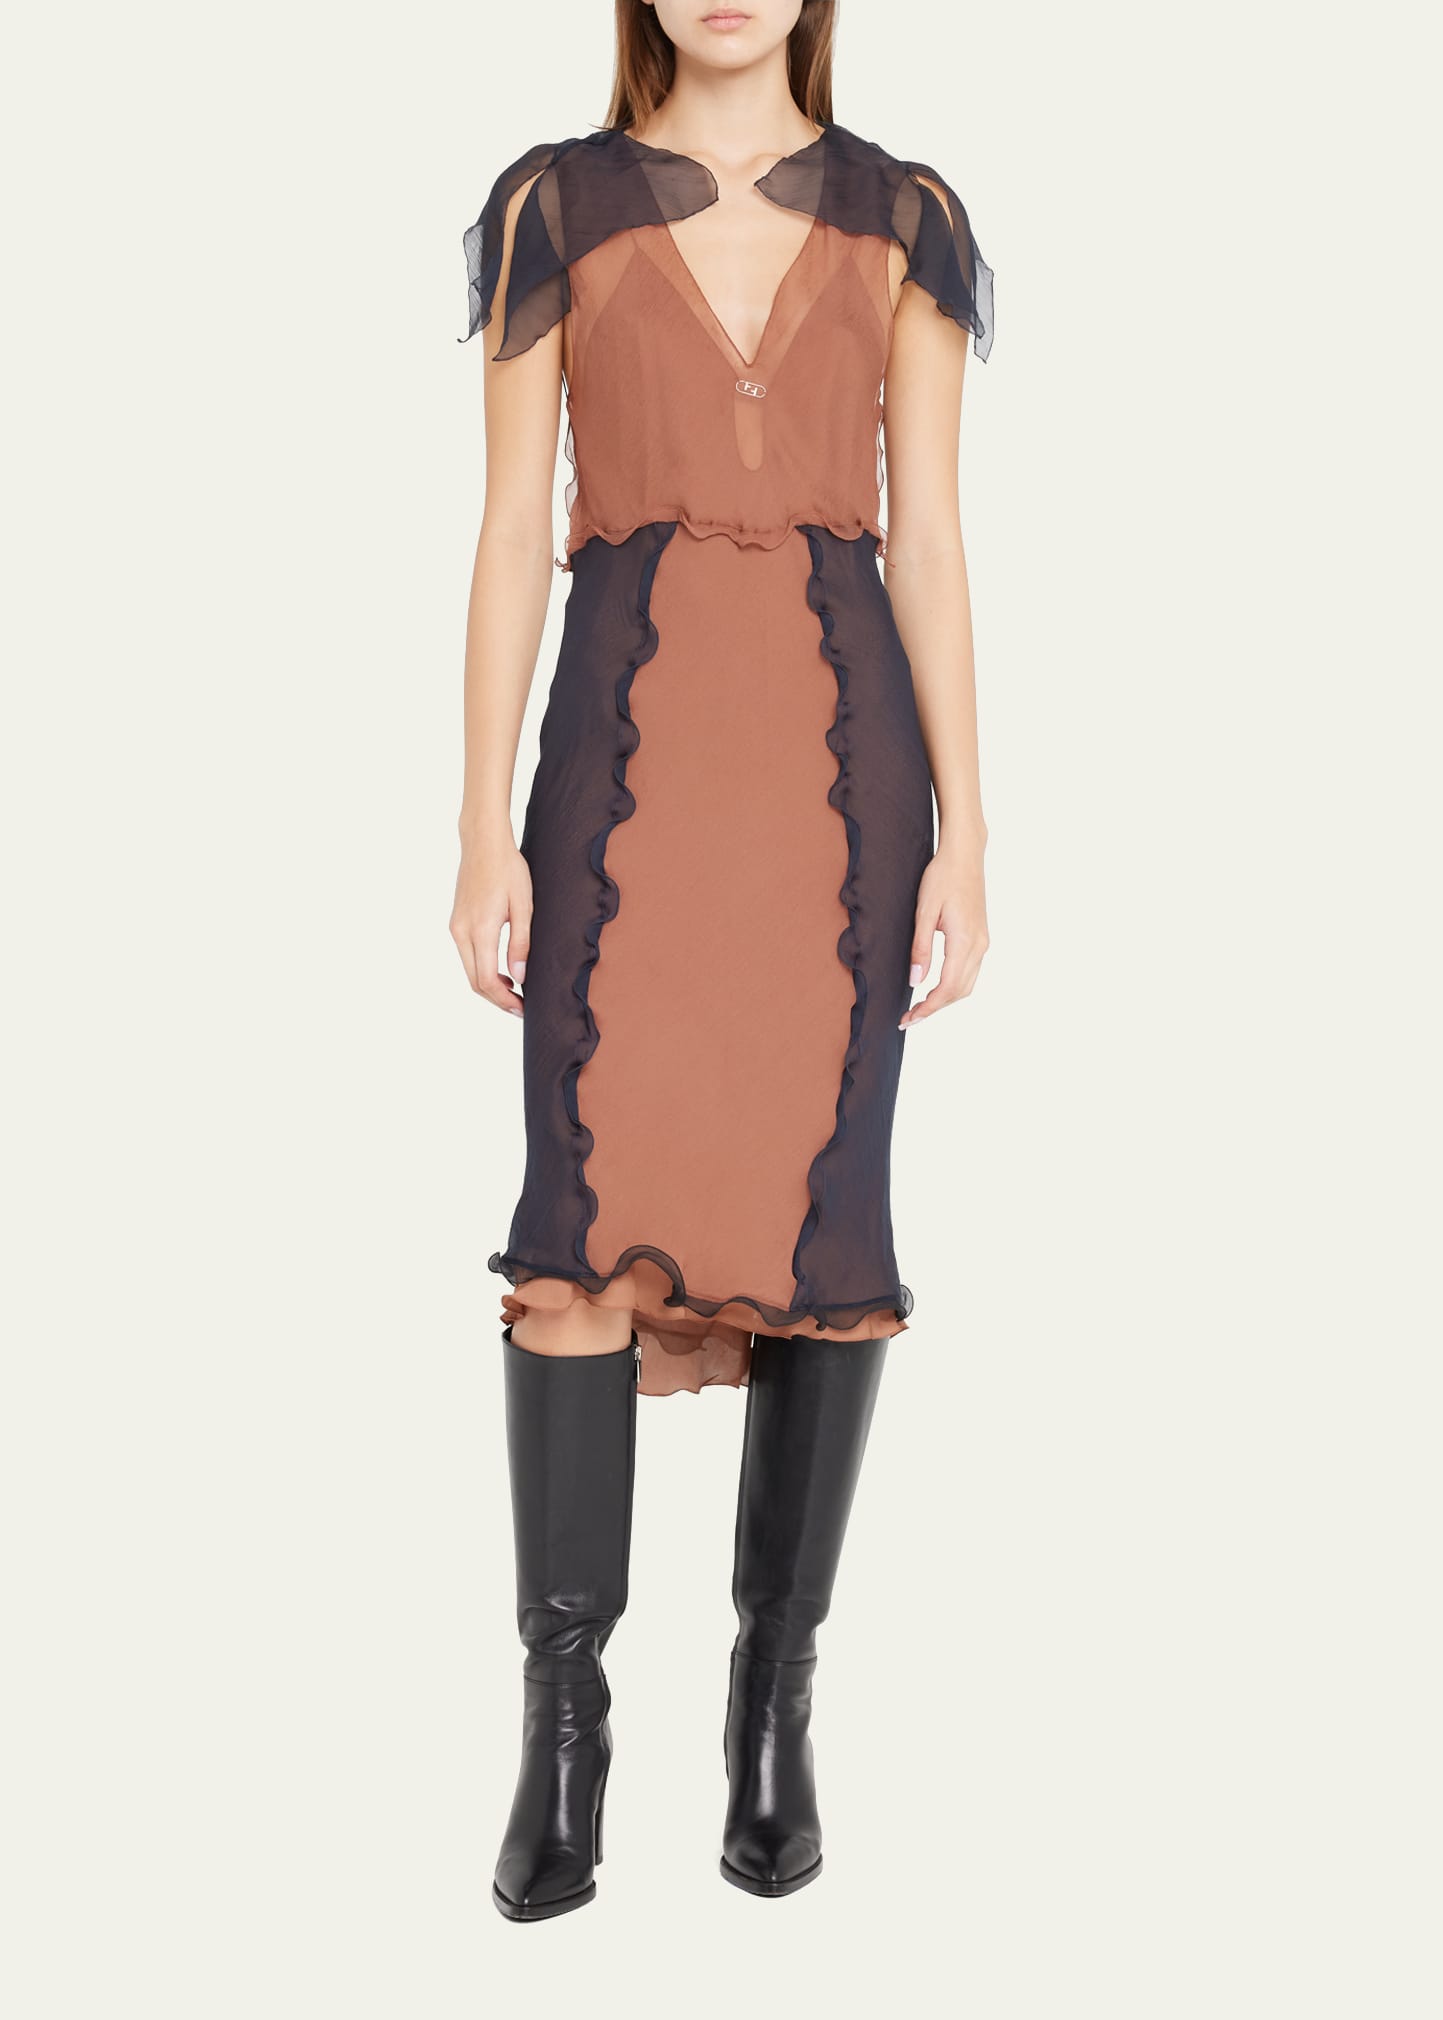 Fendi Bicolor Chiffon Ruffle-Trim Midi Dress with Slip